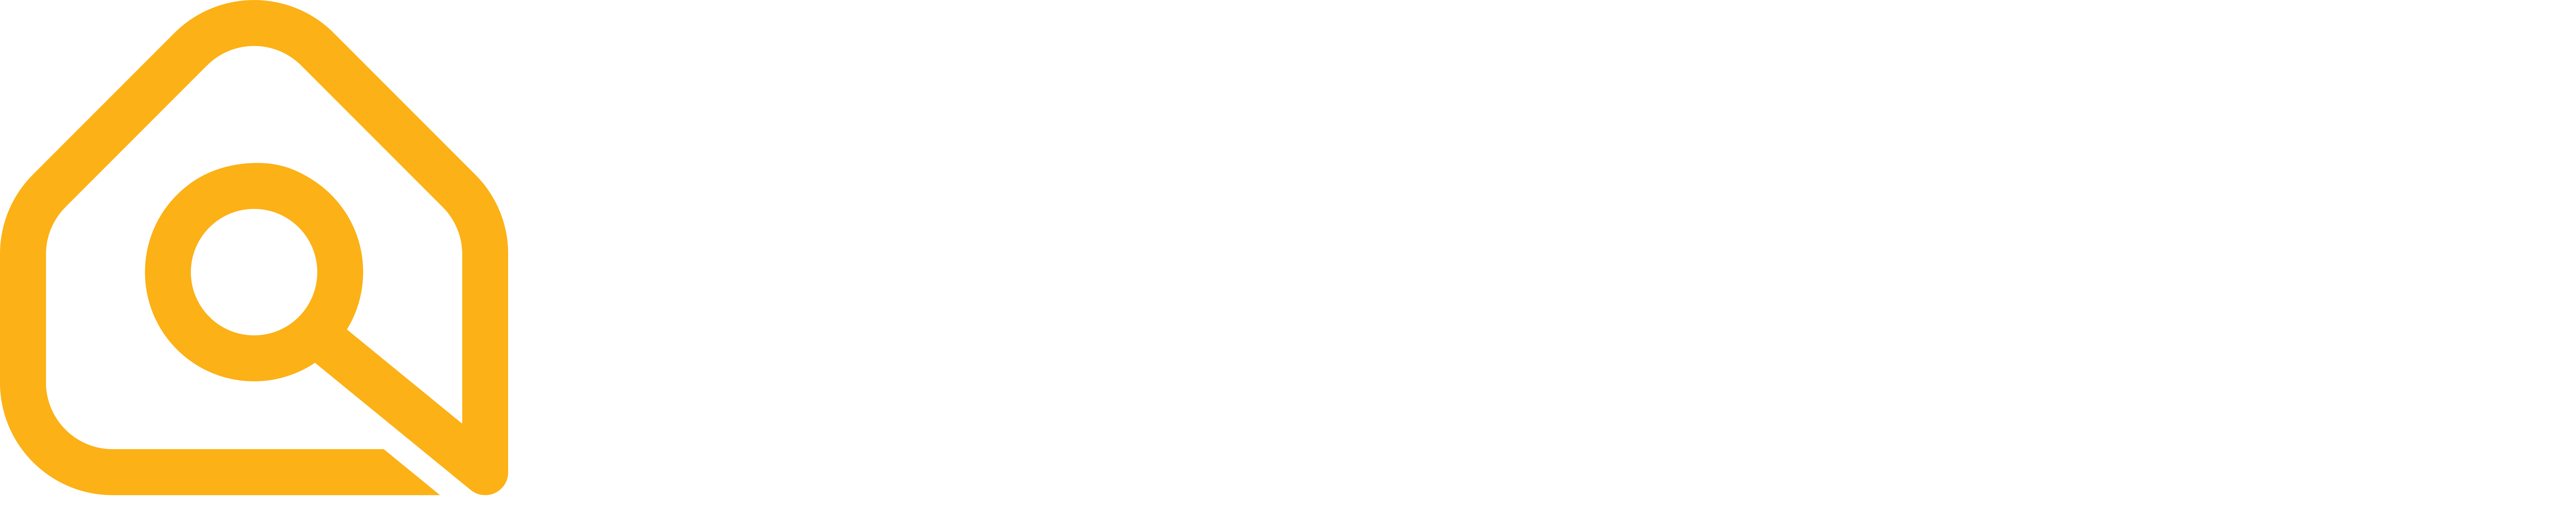 Filmplace Logo White